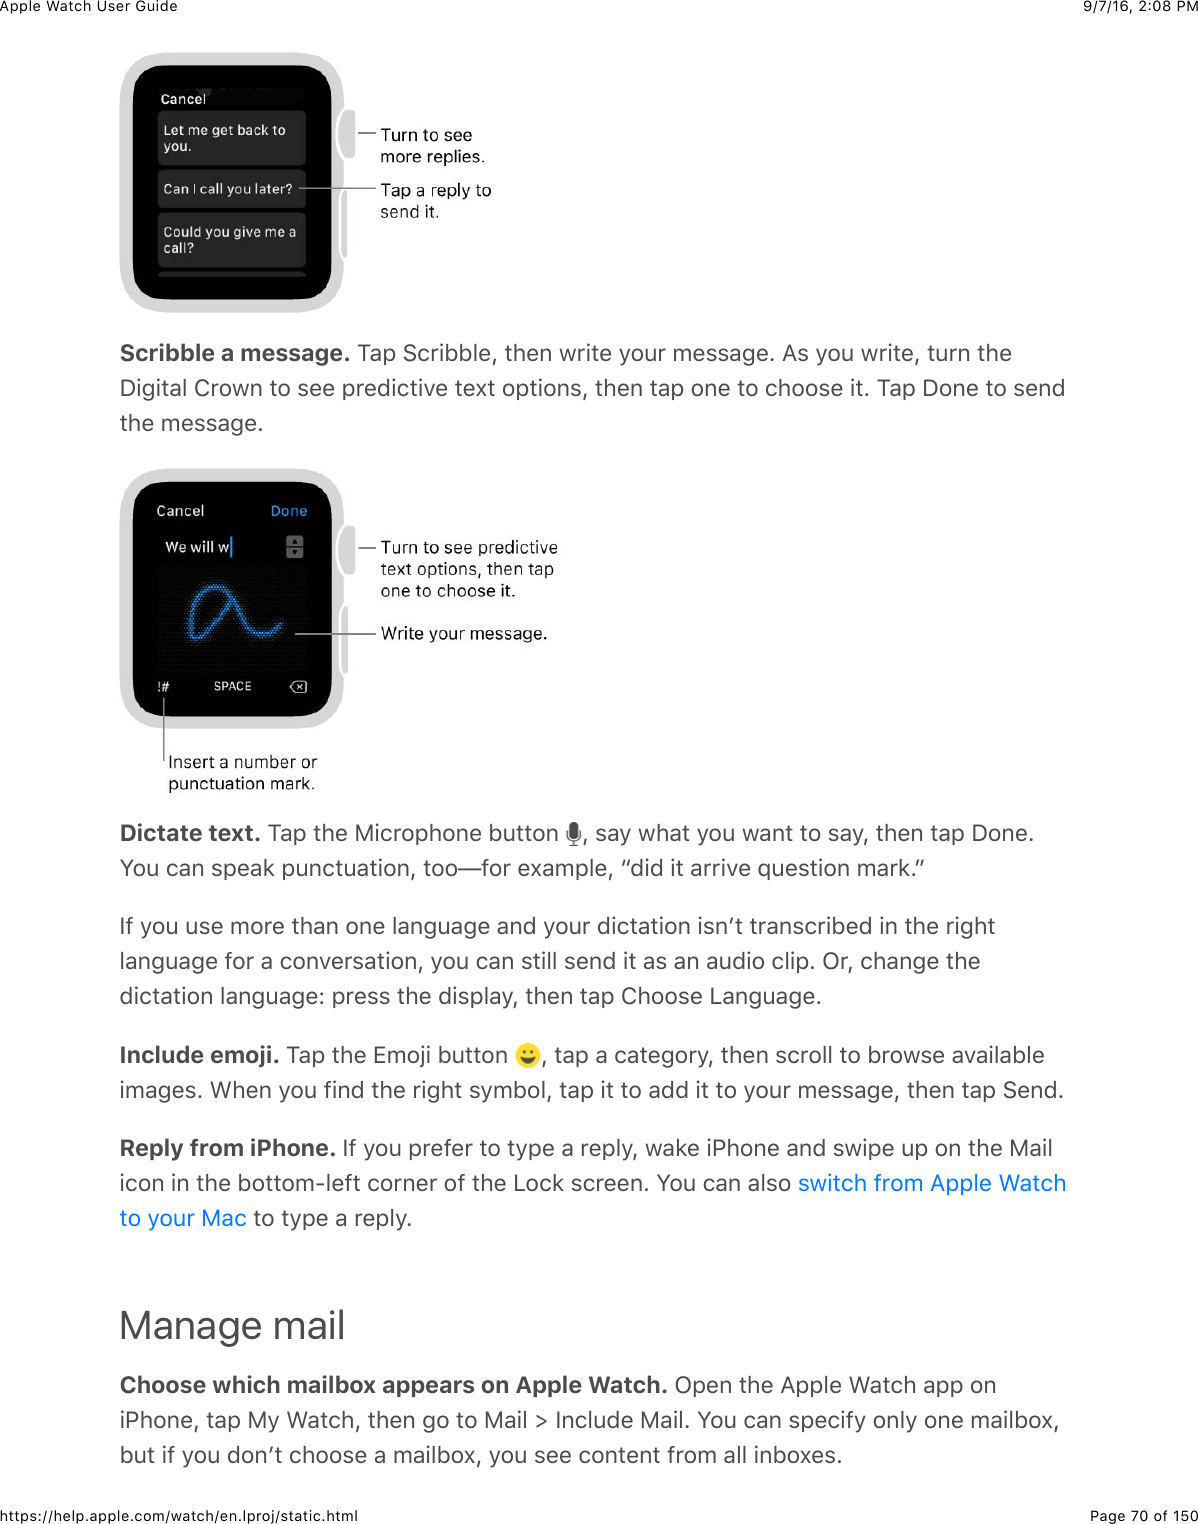 9/7/16, 2)08 PMApple Watch User GuidePage 70 of 150https://help.apple.com/watch/en.lproj/static.htmlScribble a message. 1&apos;2&amp;6(*+BB&quot;%J&amp;3)%,&amp;7*+3%&amp;/#4*&amp;5%$$&apos;-%C&amp;=$&amp;/#4&amp;7*+3%J&amp;34*,&amp;3)%I+-+3&apos;&quot;&amp;!*#7,&amp;3#&amp;$%%&amp;2*%0+(3+.%&amp;3%U3&amp;#23+#,$J&amp;3)%,&amp;3&apos;2&amp;#,%&amp;3#&amp;()##$%&amp;+3C&amp;1&apos;2&amp;I#,%&amp;3#&amp;$%,03)%&amp;5%$$&apos;-%CDictate text. 1&apos;2&amp;3)%&amp;F+(*#2)#,%&amp;B433#,&amp; J&amp;$&apos;/&amp;7)&apos;3&amp;/#4&amp;7&apos;,3&amp;3#&amp;$&apos;/J&amp;3)%,&amp;3&apos;2&amp;I#,%CS#4&amp;(&apos;,&amp;$2%&apos;8&amp;24,(34&apos;3+#,J&amp;3##T@#*&amp;%U&apos;52&quot;%J&amp;a0+0&amp;+3&amp;&apos;**+.%&amp;X4%$3+#,&amp;5&apos;*8CbY@&amp;/#4&amp;4$%&amp;5#*%&amp;3)&apos;,&amp;#,%&amp;&quot;&apos;,-4&apos;-%&amp;&apos;,0&amp;/#4*&amp;0+(3&apos;3+#,&amp;+$,W3&amp;3*&apos;,$(*+B%0&amp;+,&amp;3)%&amp;*+-)3&quot;&apos;,-4&apos;-%&amp;@#*&amp;&apos;&amp;(#,.%*$&apos;3+#,J&amp;/#4&amp;(&apos;,&amp;$3+&quot;&quot;&amp;$%,0&amp;+3&amp;&apos;$&amp;&apos;,&amp;&apos;40+#&amp;(&quot;+2C&amp;L*J&amp;()&apos;,-%&amp;3)%0+(3&apos;3+#,&amp;&quot;&apos;,-4&apos;-%e&amp;2*%$$&amp;3)%&amp;0+$2&quot;&apos;/J&amp;3)%,&amp;3&apos;2&amp;!)##$%&amp;&lt;&apos;,-4&apos;-%CInclude emoji. 1&apos;2&amp;3)%&amp;Z5#O+&amp;B433#,&amp; J&amp;3&apos;2&amp;&apos;&amp;(&apos;3%-#*/J&amp;3)%,&amp;$(*#&quot;&quot;&amp;3#&amp;B*#7$%&amp;&apos;.&apos;+&quot;&apos;B&quot;%+5&apos;-%$C&amp;&gt;)%,&amp;/#4&amp;@+,0&amp;3)%&amp;*+-)3&amp;$/5B#&quot;J&amp;3&apos;2&amp;+3&amp;3#&amp;&apos;00&amp;+3&amp;3#&amp;/#4*&amp;5%$$&apos;-%J&amp;3)%,&amp;3&apos;2&amp;6%,0CReply from iPhone. Y@&amp;/#4&amp;2*%@%*&amp;3#&amp;3/2%&amp;&apos;&amp;*%2&quot;/J&amp;7&apos;8%&amp;+G)#,%&amp;&apos;,0&amp;$7+2%&amp;42&amp;#,&amp;3)%&amp;F&apos;+&quot;+(#,&amp;+,&amp;3)%&amp;B#33#5?&quot;%@3&amp;(#*,%*&amp;#@&amp;3)%&amp;&lt;#(8&amp;$(*%%,C&amp;S#4&amp;(&apos;,&amp;&apos;&quot;$#&amp;&amp;3#&amp;3/2%&amp;&apos;&amp;*%2&quot;/CManage mailChoose which mailbox appears on Apple Watch. L2%,&amp;3)%&amp;=22&quot;%&amp;&gt;&apos;3()&amp;&apos;22&amp;#,+G)#,%J&amp;3&apos;2&amp;F/&amp;&gt;&apos;3()J&amp;3)%,&amp;-#&amp;3#&amp;F&apos;+&quot;&amp;d&amp;Y,(&quot;40%&amp;F&apos;+&quot;C&amp;S#4&amp;(&apos;,&amp;$2%(+@/&amp;#,&quot;/&amp;#,%&amp;5&apos;+&quot;B#UJB43&amp;+@&amp;/#4&amp;0#,W3&amp;()##$%&amp;&apos;&amp;5&apos;+&quot;B#UJ&amp;/#4&amp;$%%&amp;(#,3%,3&amp;@*#5&amp;&apos;&quot;&quot;&amp;+,B#U%$C$7+3()&amp;@*#5&amp;=22&quot;%&amp;&gt;&apos;3()3#&amp;/#4*&amp;F&apos;(